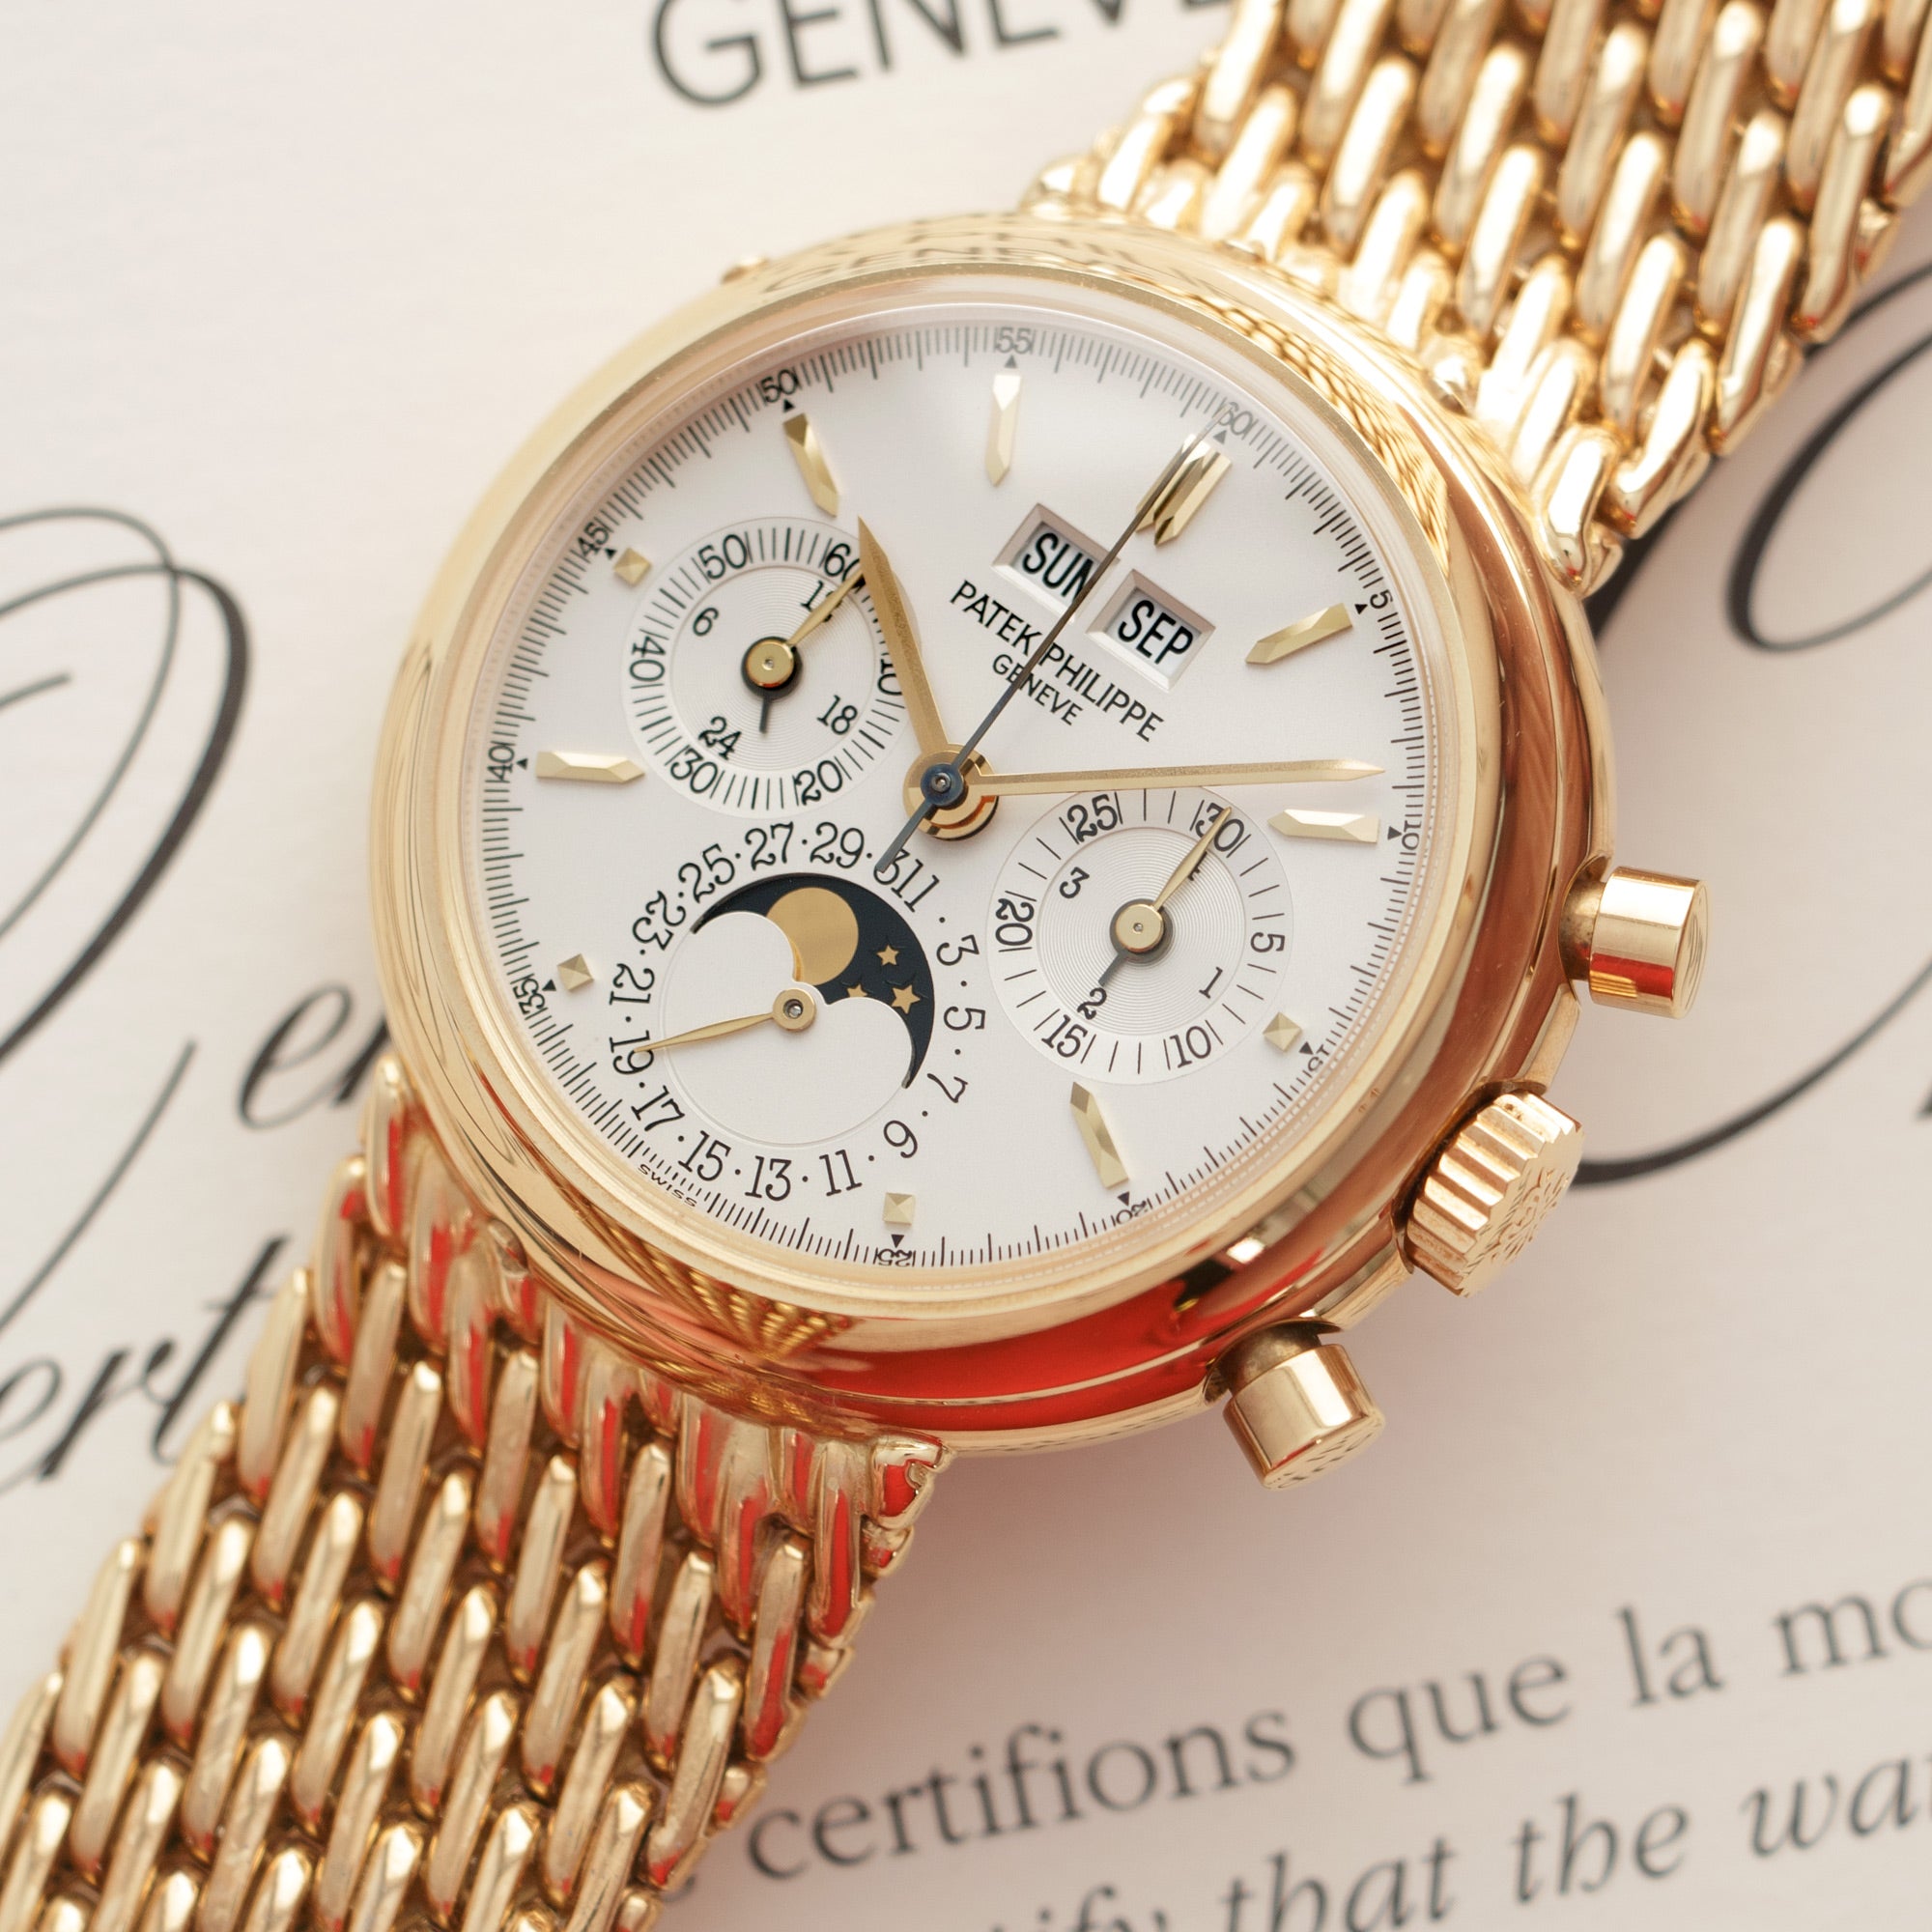 Patek Philippe - Patek Philippe Yellow Gold Perpetual Calendar Chronograph Watch Ref. 3970 - The Keystone Watches